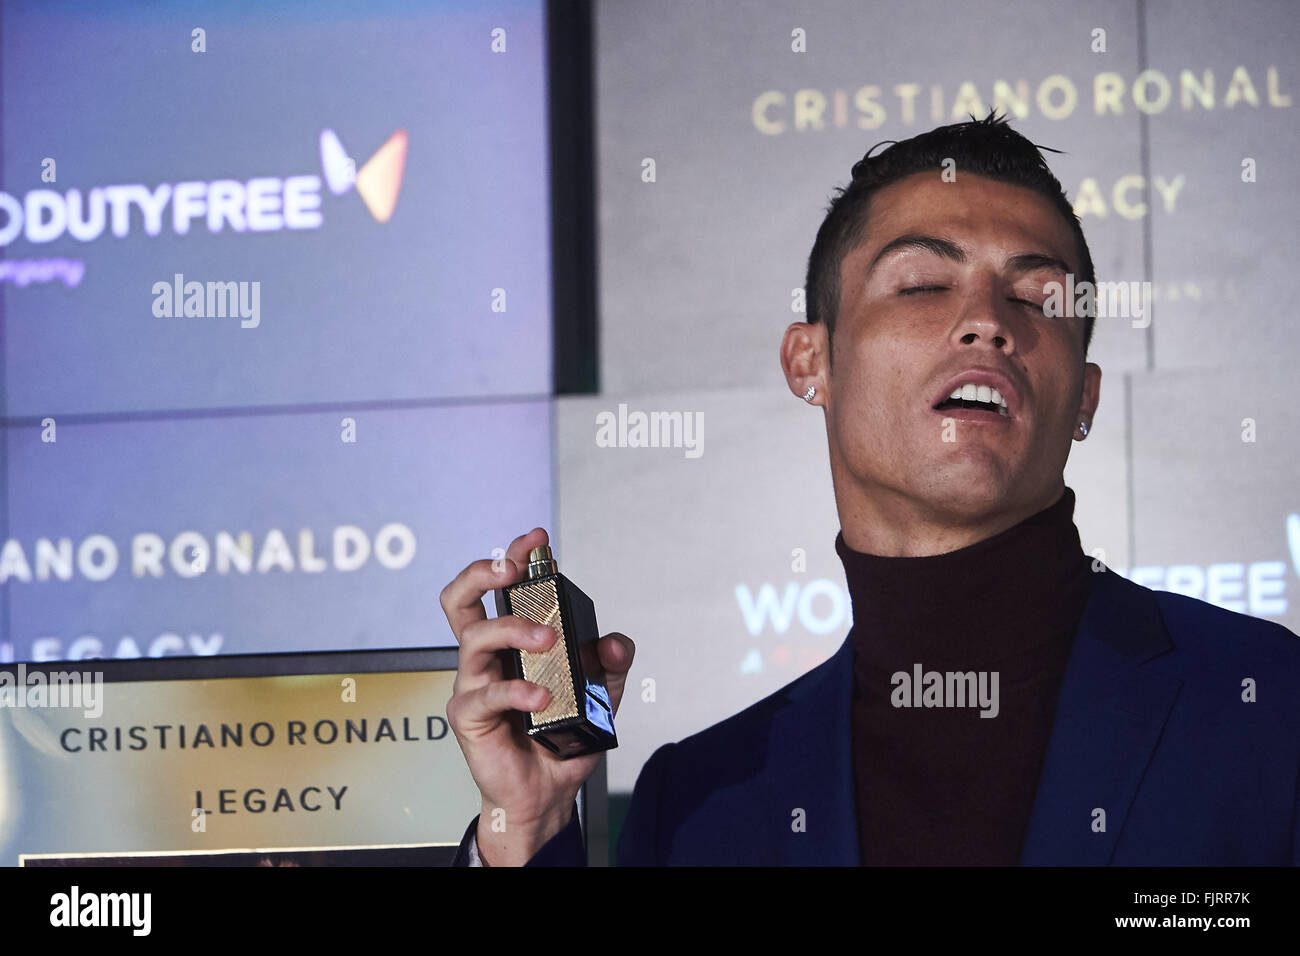 B/R Football on X: Cristiano Ronaldo presents his new fragrance, the  'Cristiano Ronaldo Legacy' in Madrid today.  / X